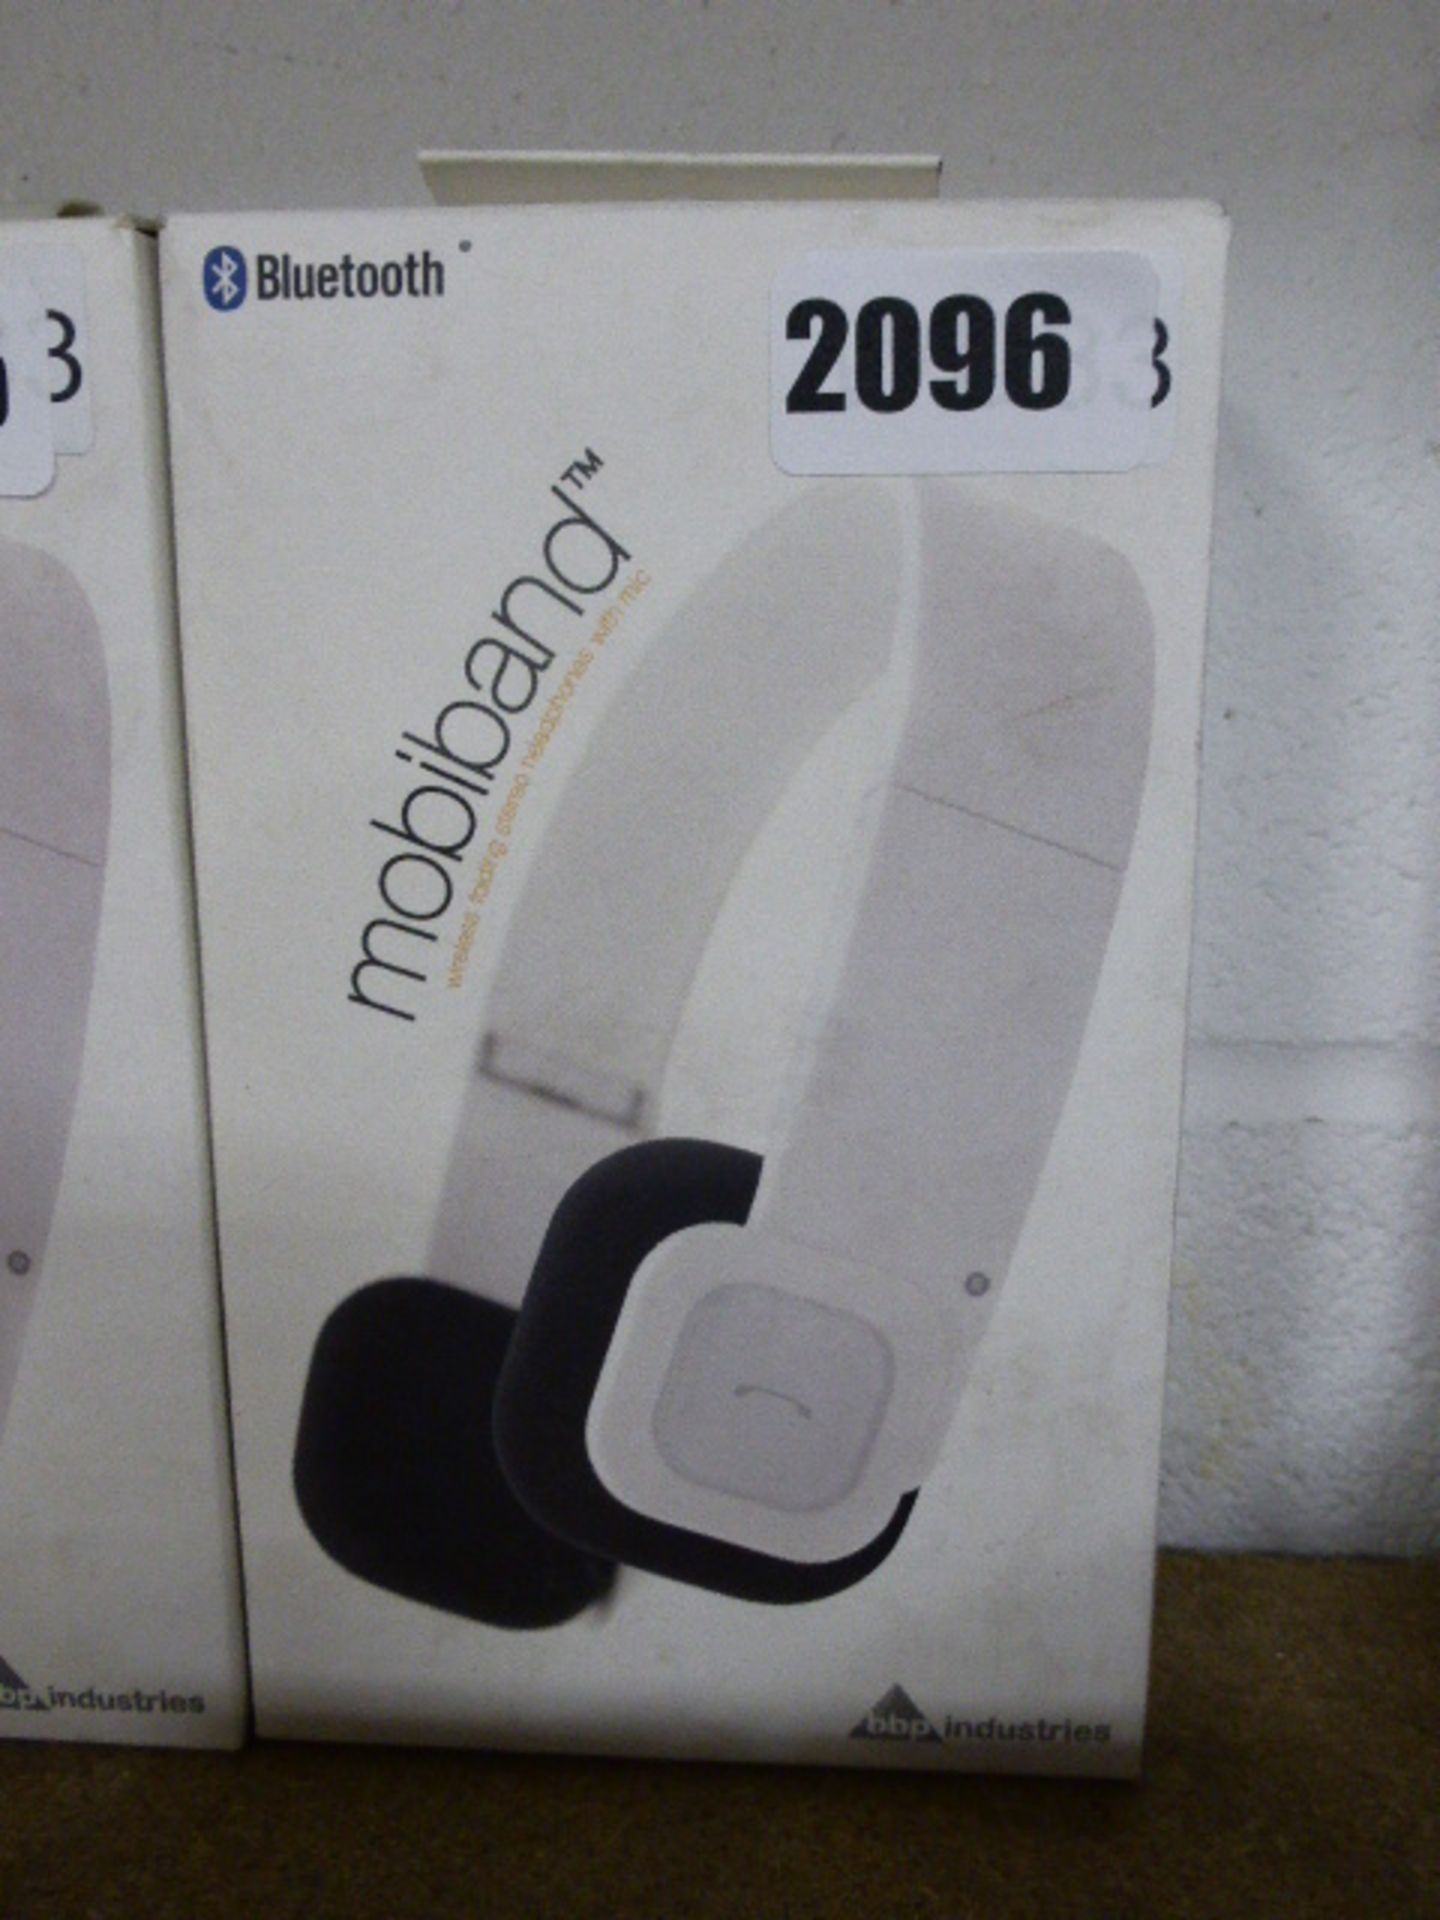 Bluetooth Mobiband headphones